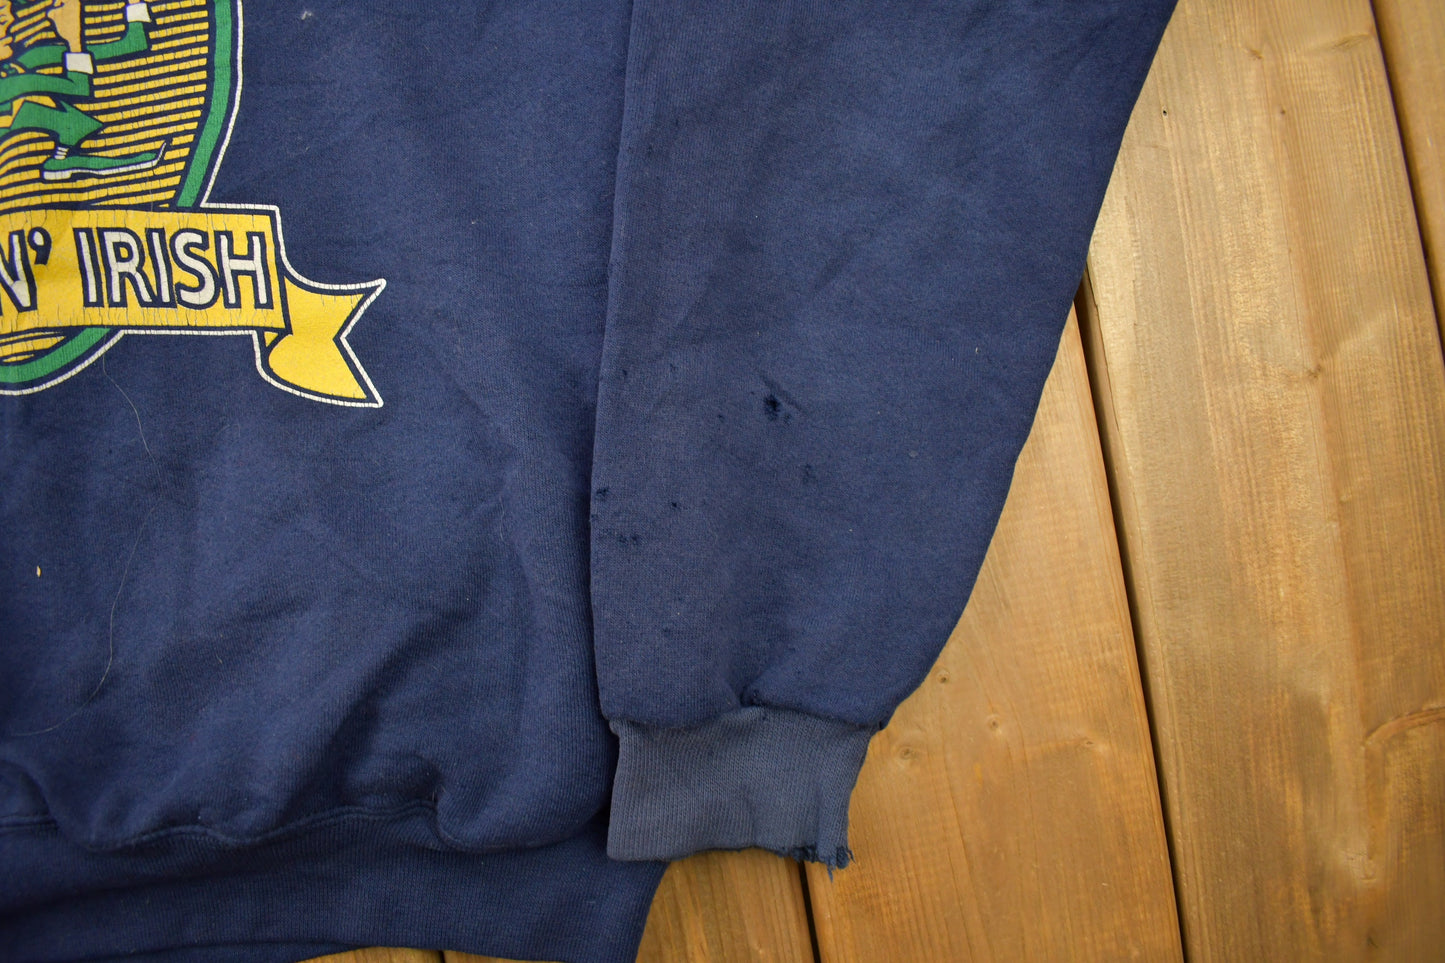 Vintage 1990s University Of Notre Dame Fighting Irish Collegiate Hoodie / NCAA Sweatshirt / Sportswear / Americana / Made In USA